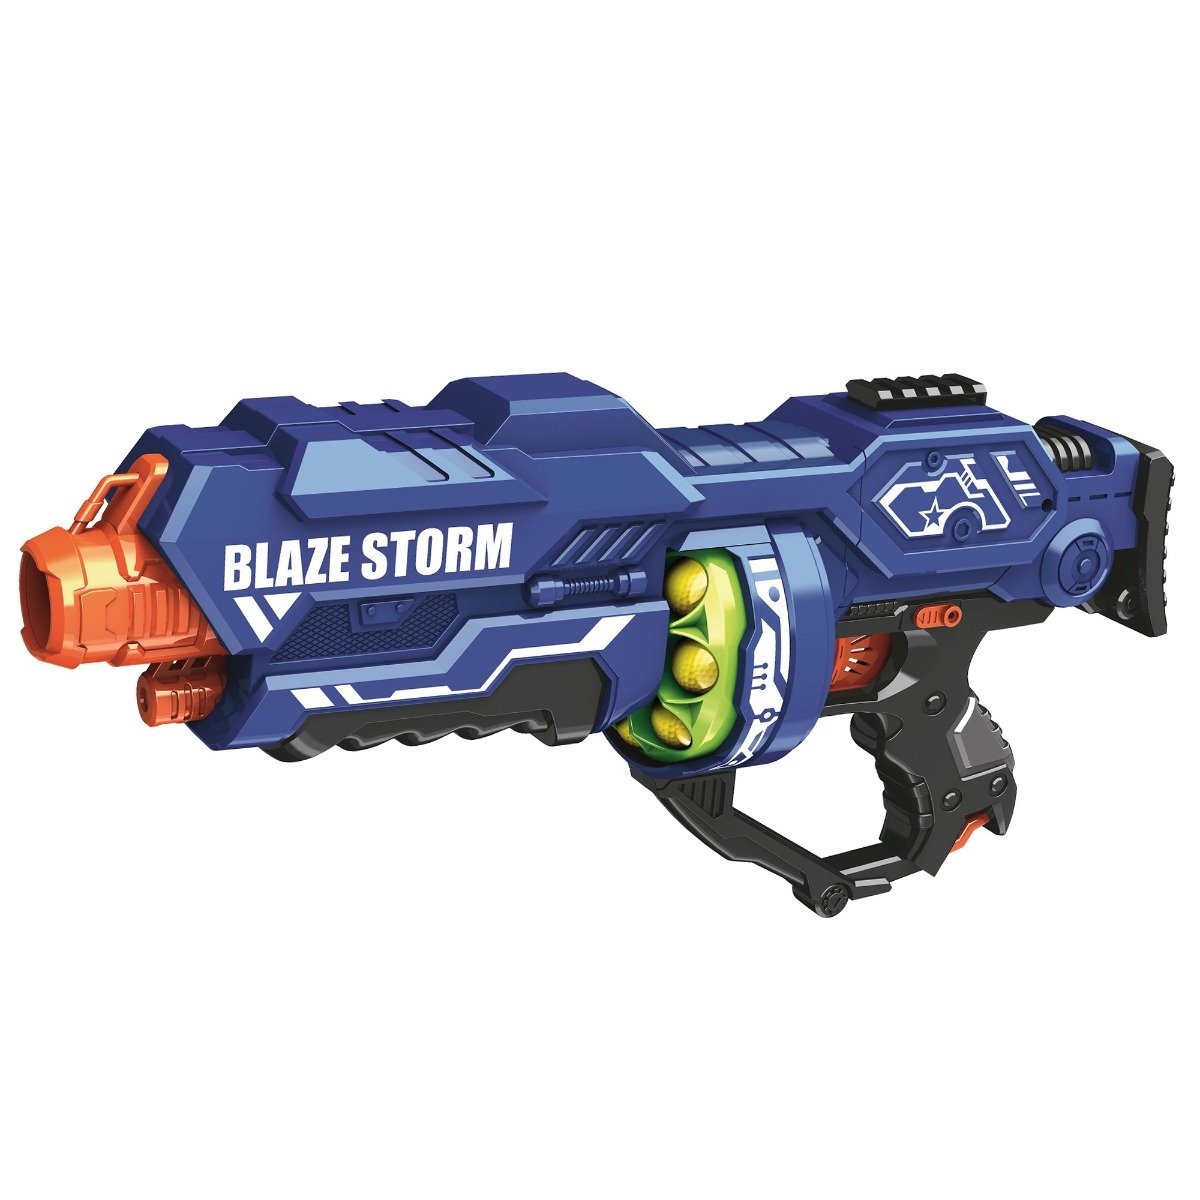 Pistol cu 12 bile din burete, Blaze Storm, Zapp Toys, Albastru